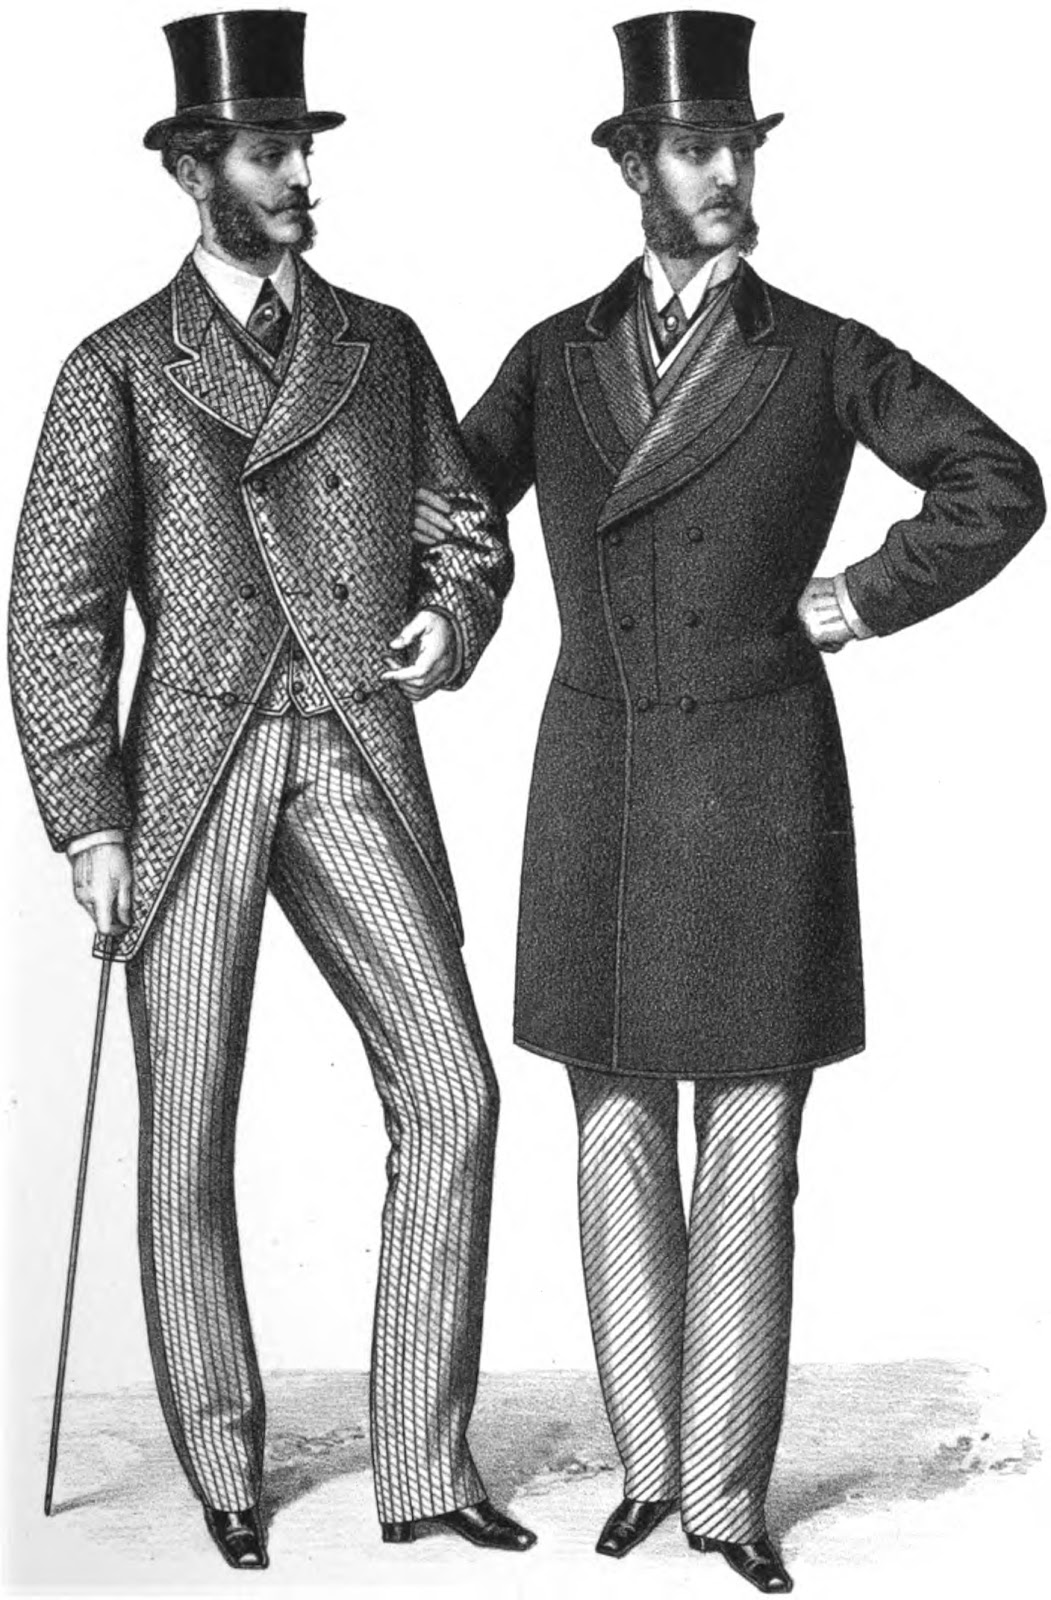 19 век россия мужчины. Одежда Кристиан 19 века. Мода 19го века мужская. Костюм англичанина 19 века. Сьют одежда 19 век.